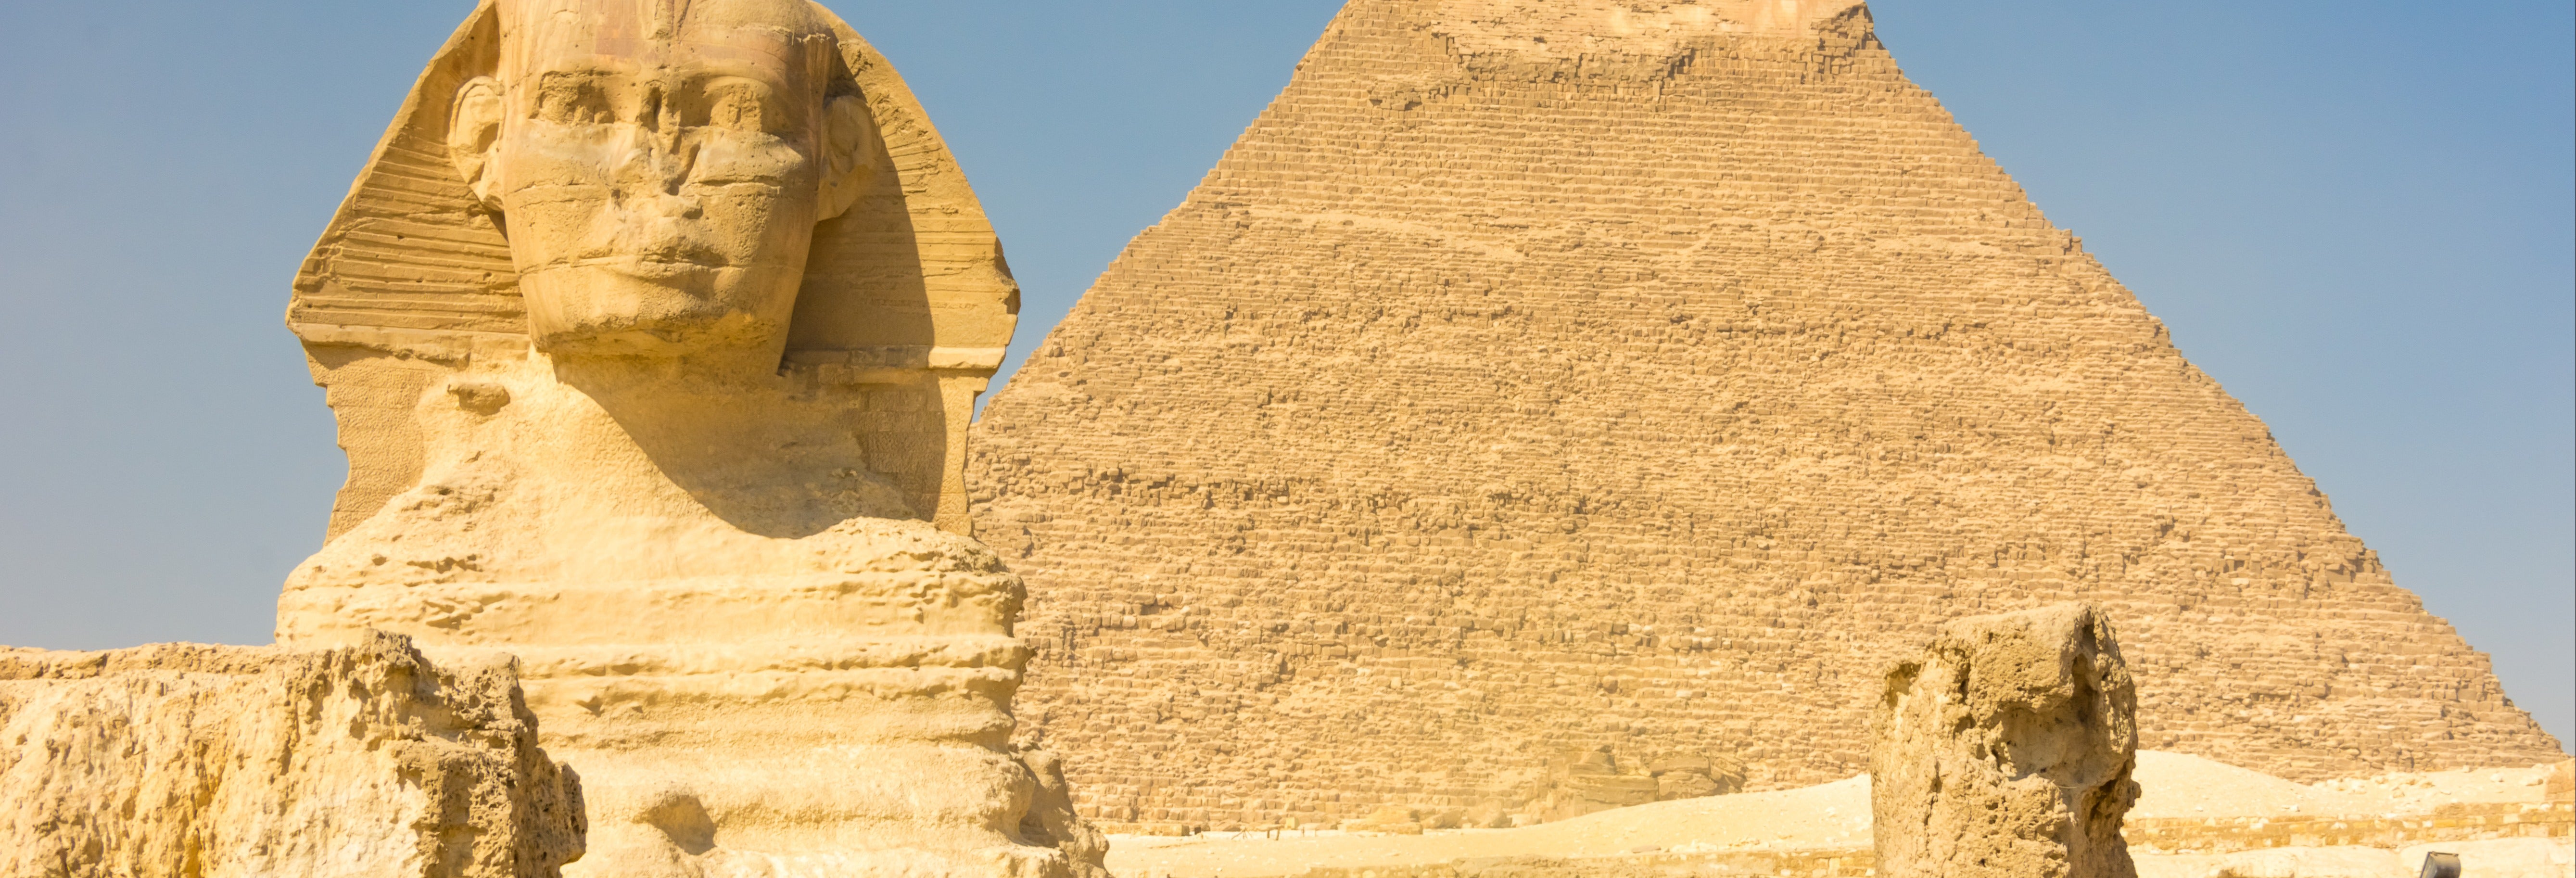 Pirâmides de Gizé, Mênfis e Saqqara